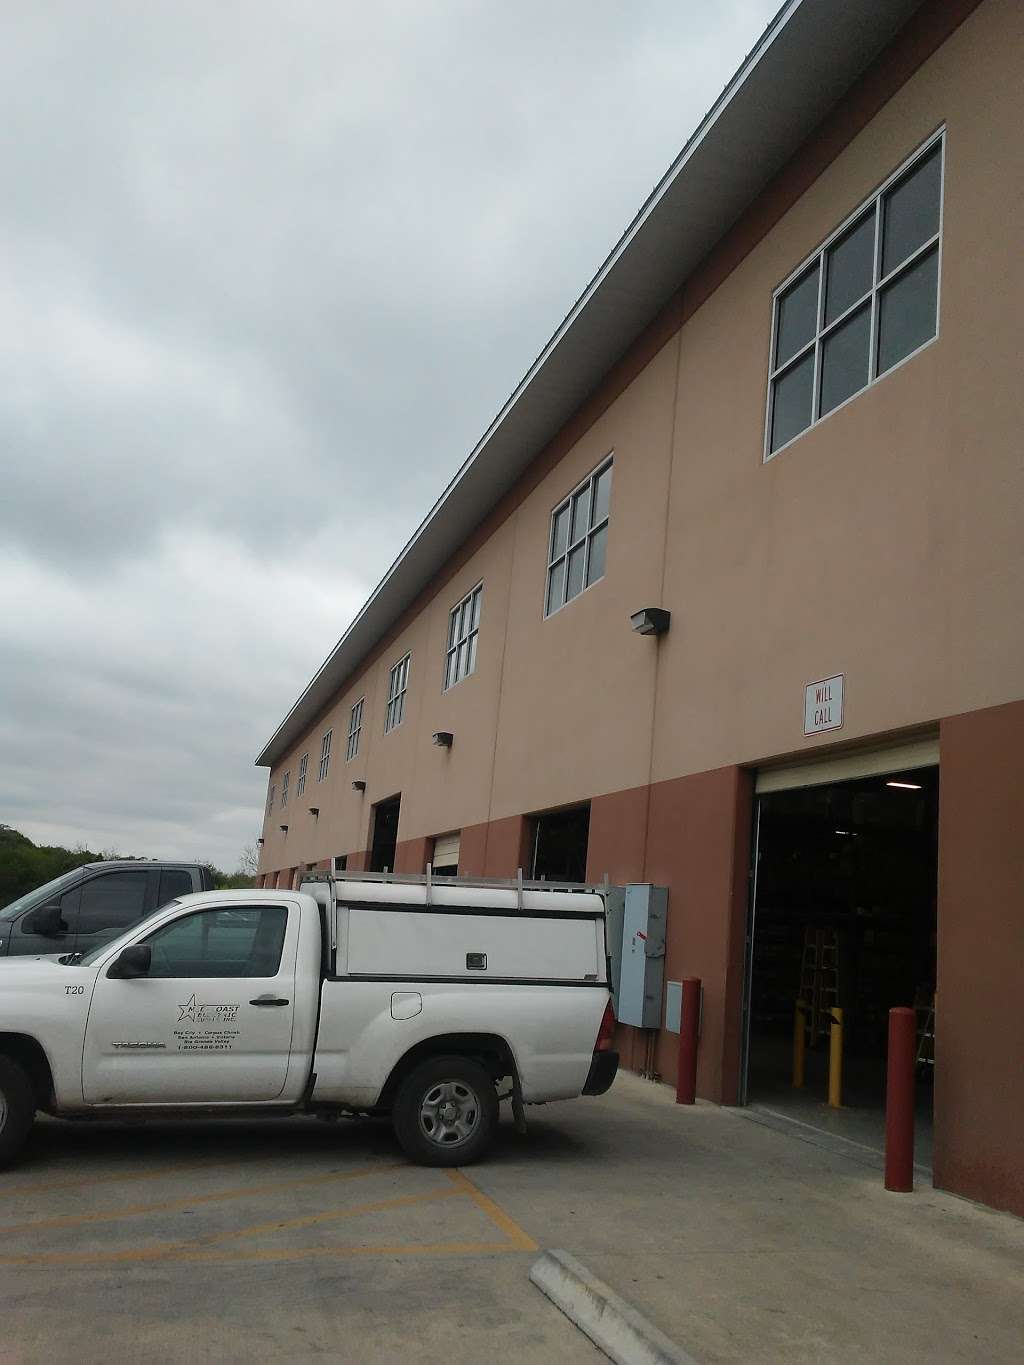 Mid-Coast Electric Supply, Inc. | 3354 Nacogdoches Rd, San Antonio, TX 78217, USA | Phone: (210) 655-8222